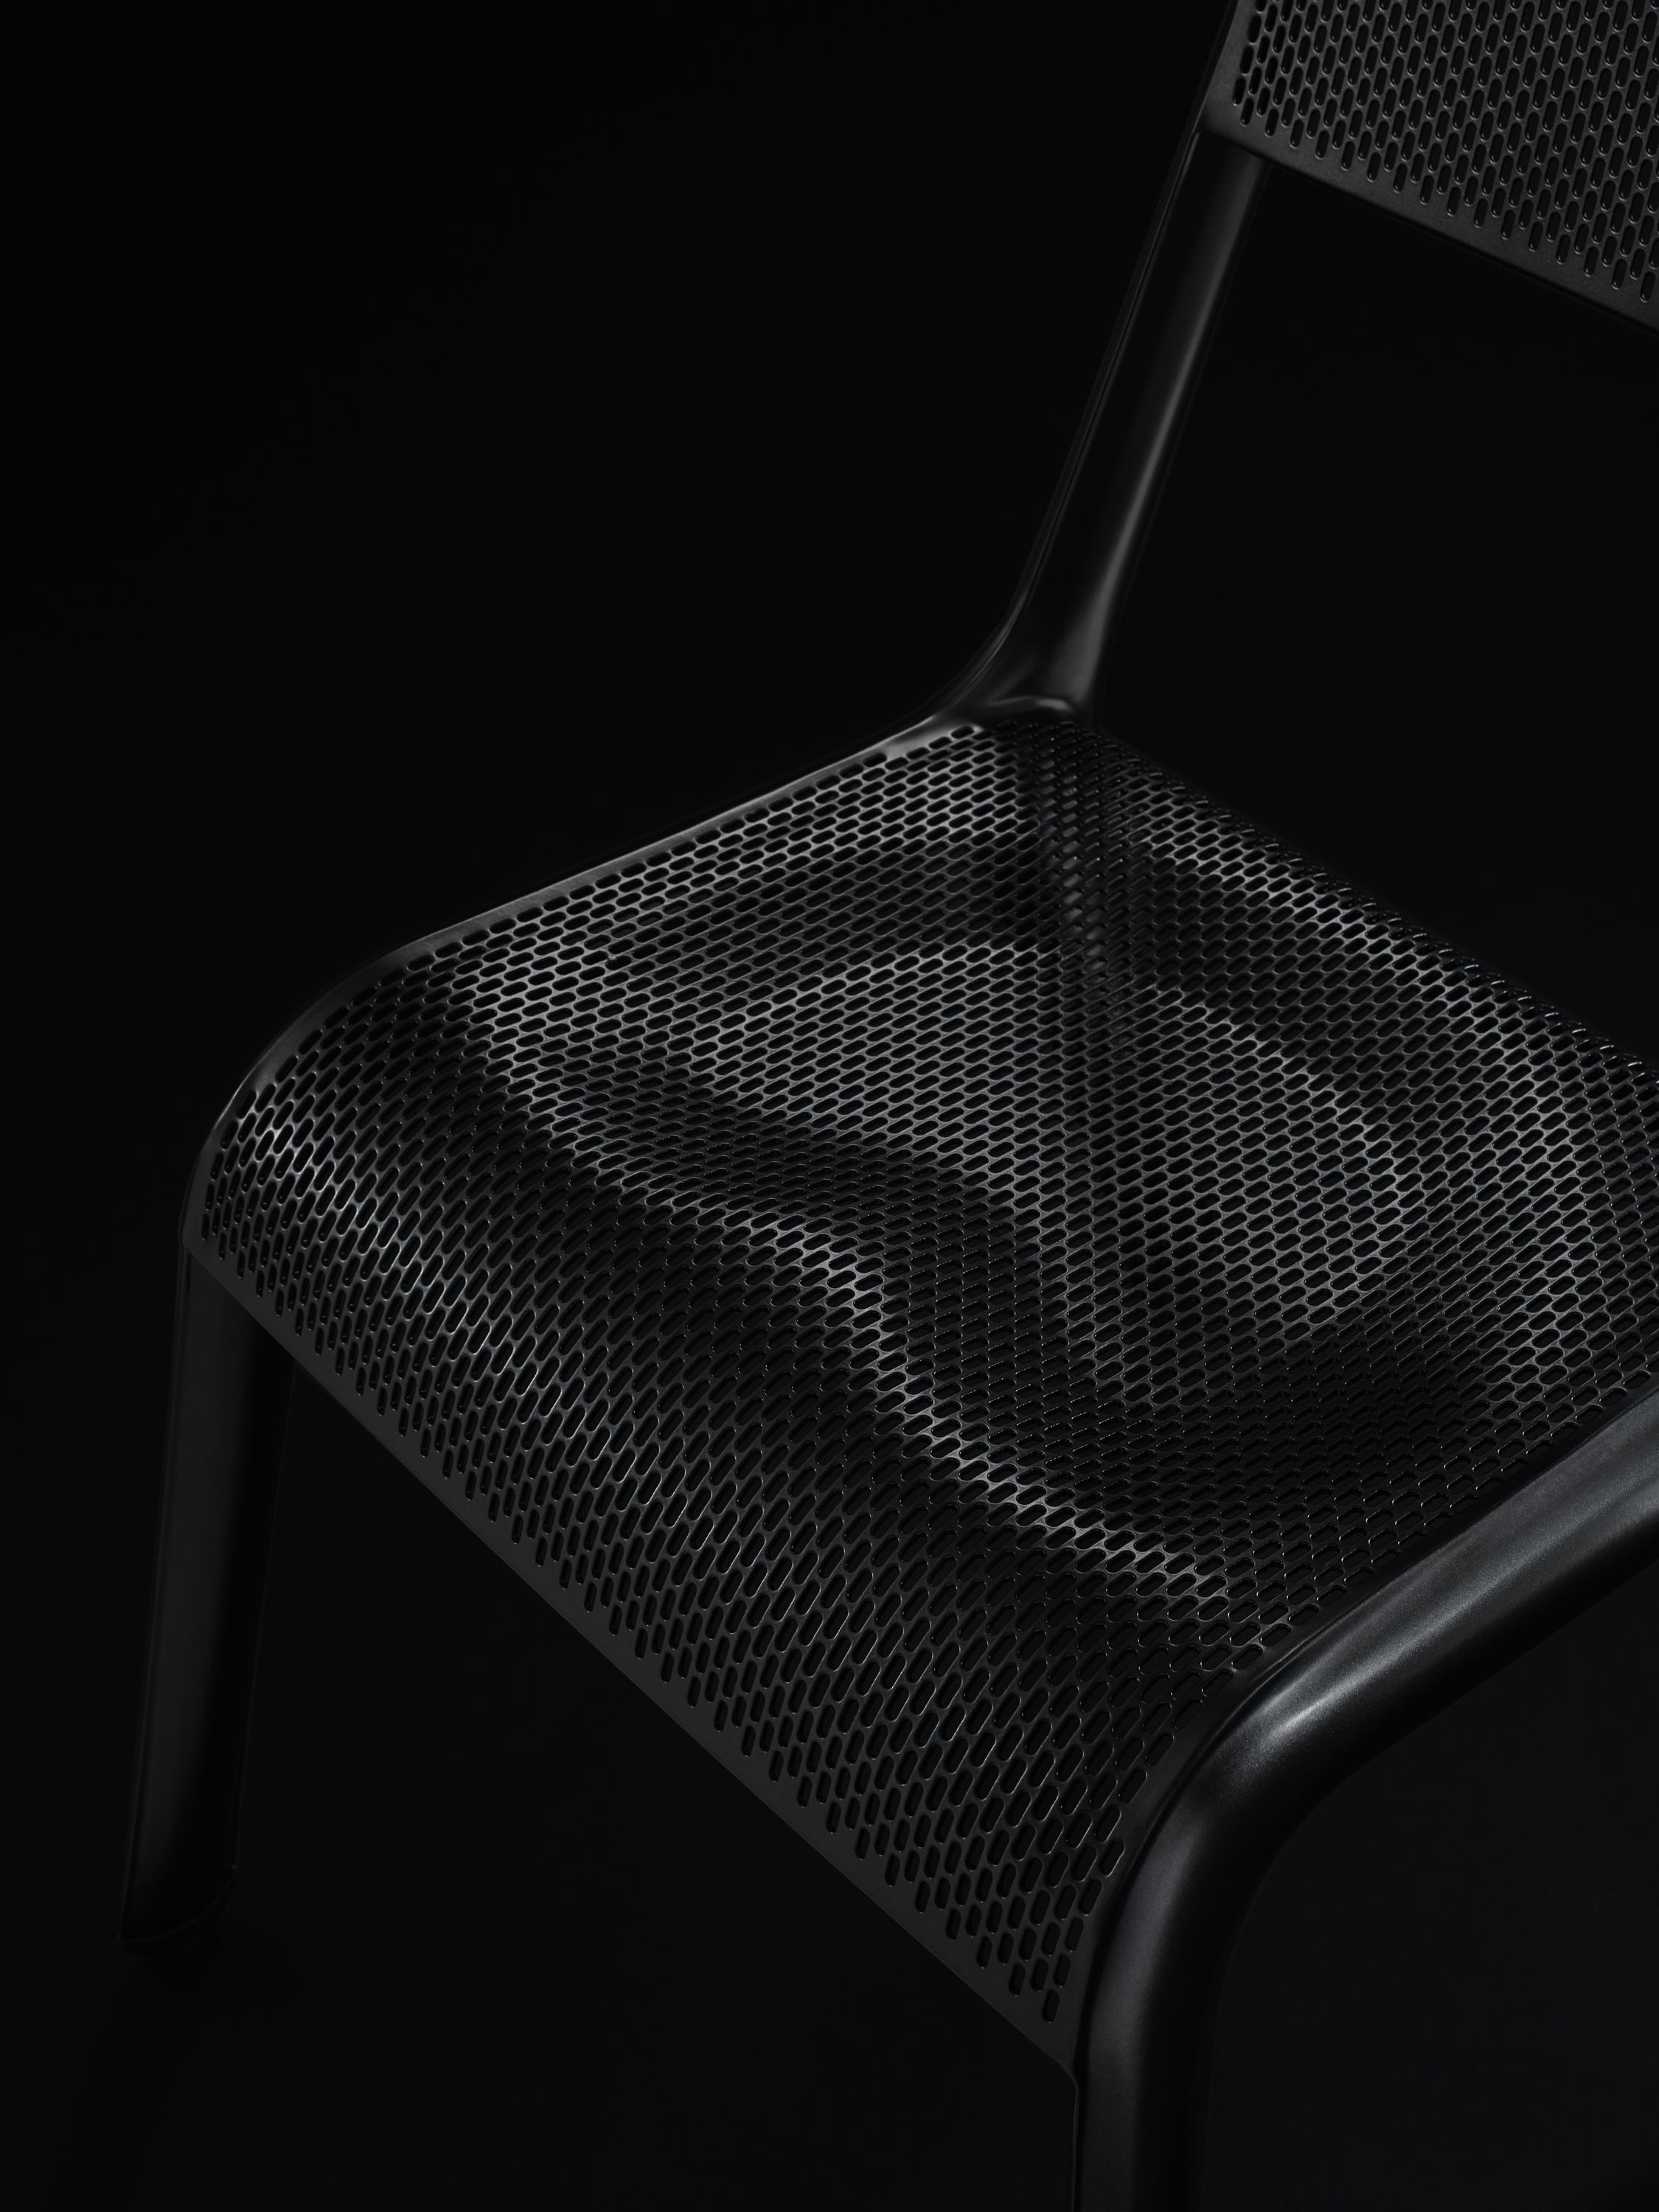 Black Anodic Ultraleggera Chair by Zieta In New Condition For Sale In Geneve, CH